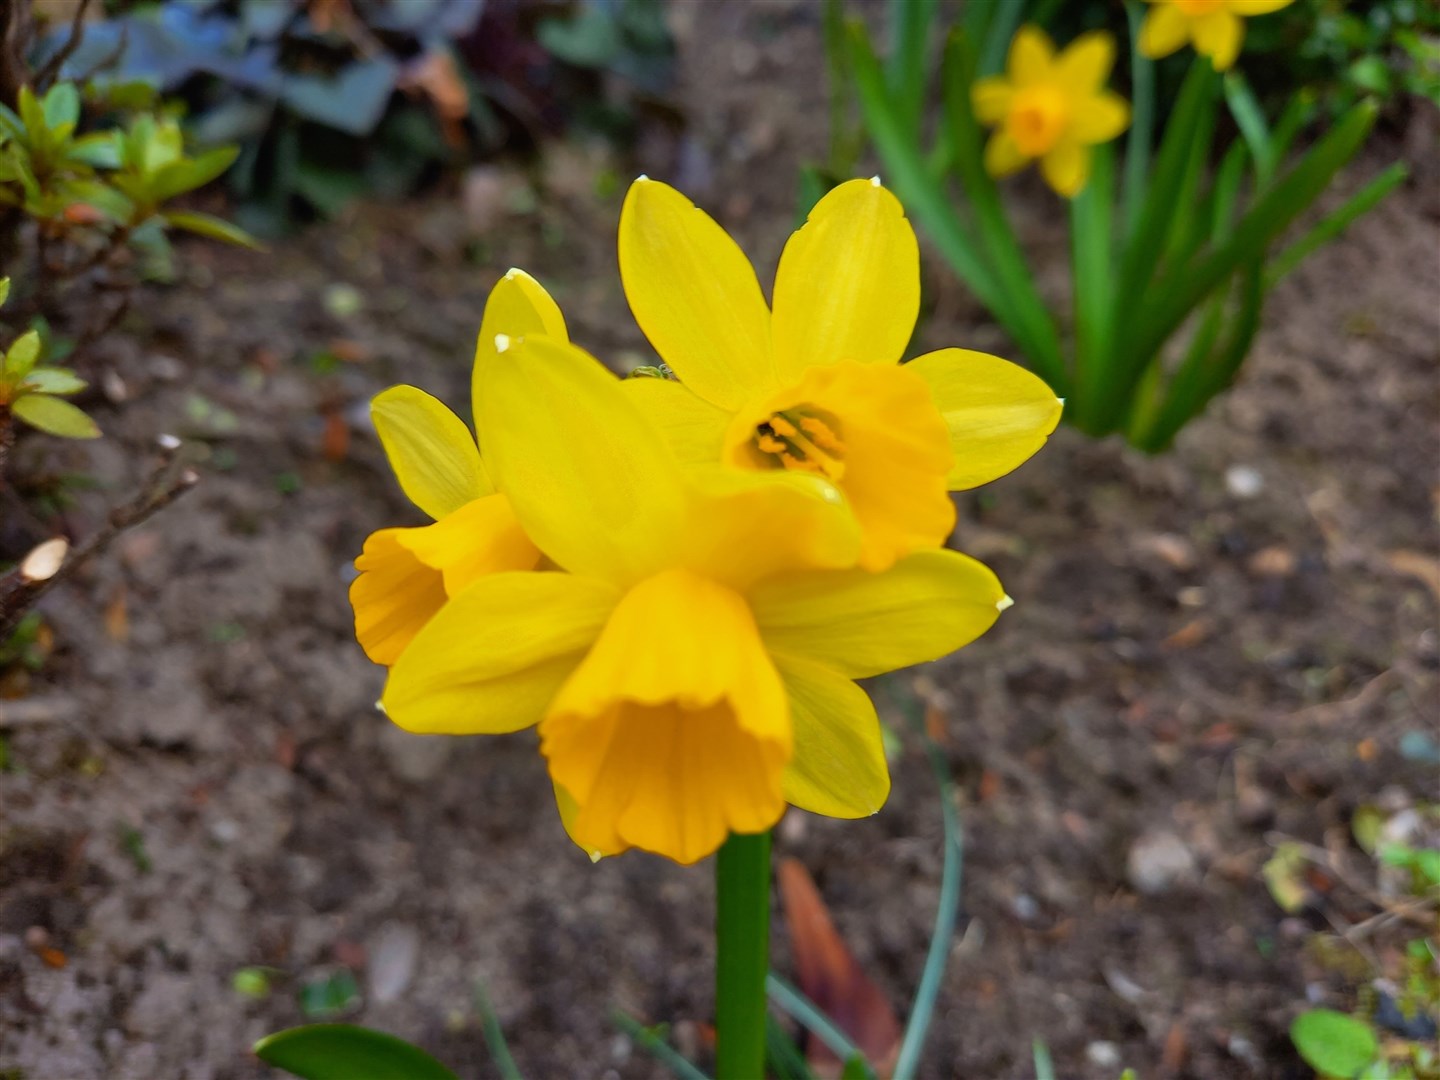 Lisa's three-headed daffodil.